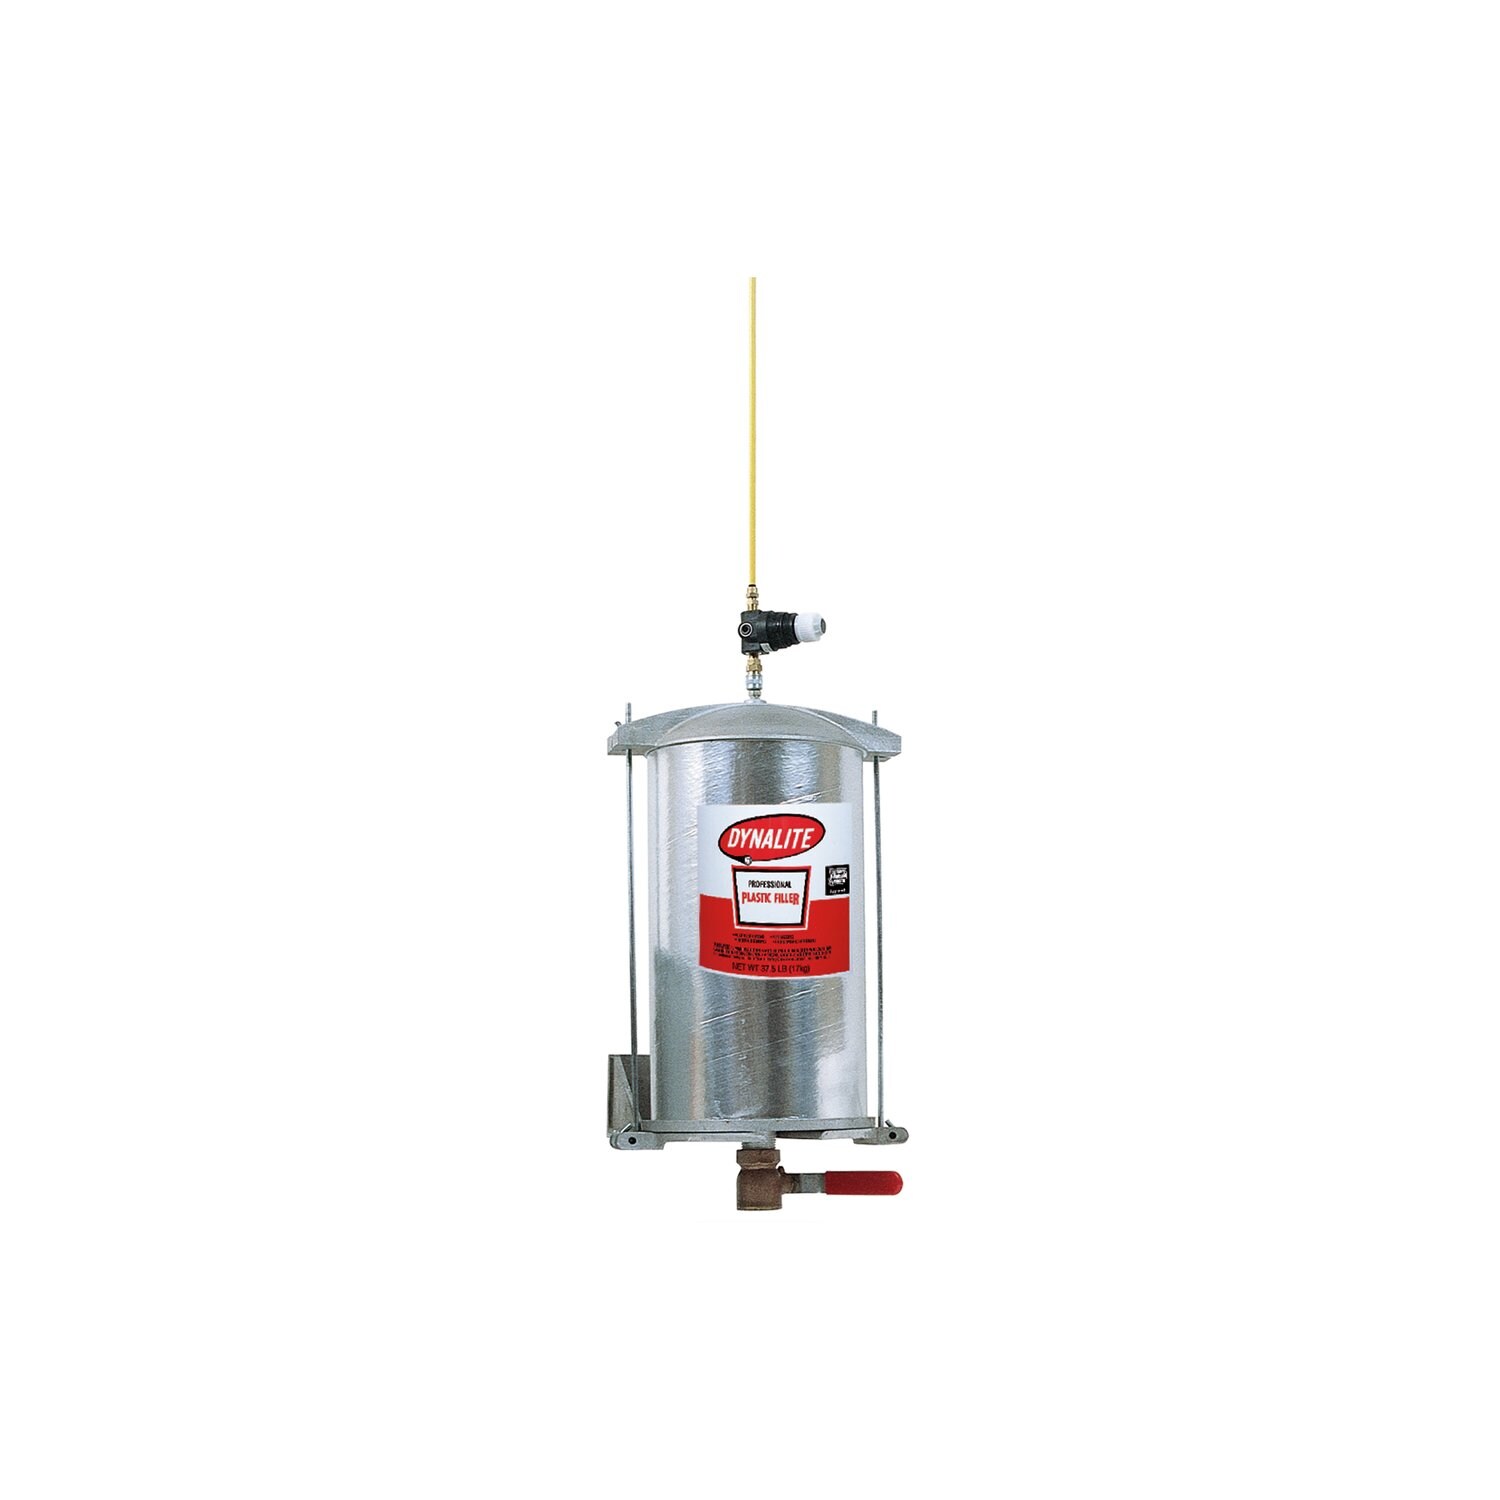 7000125081 - Dynatron Dispenser Kit, 106, 5 gal, 1 per case